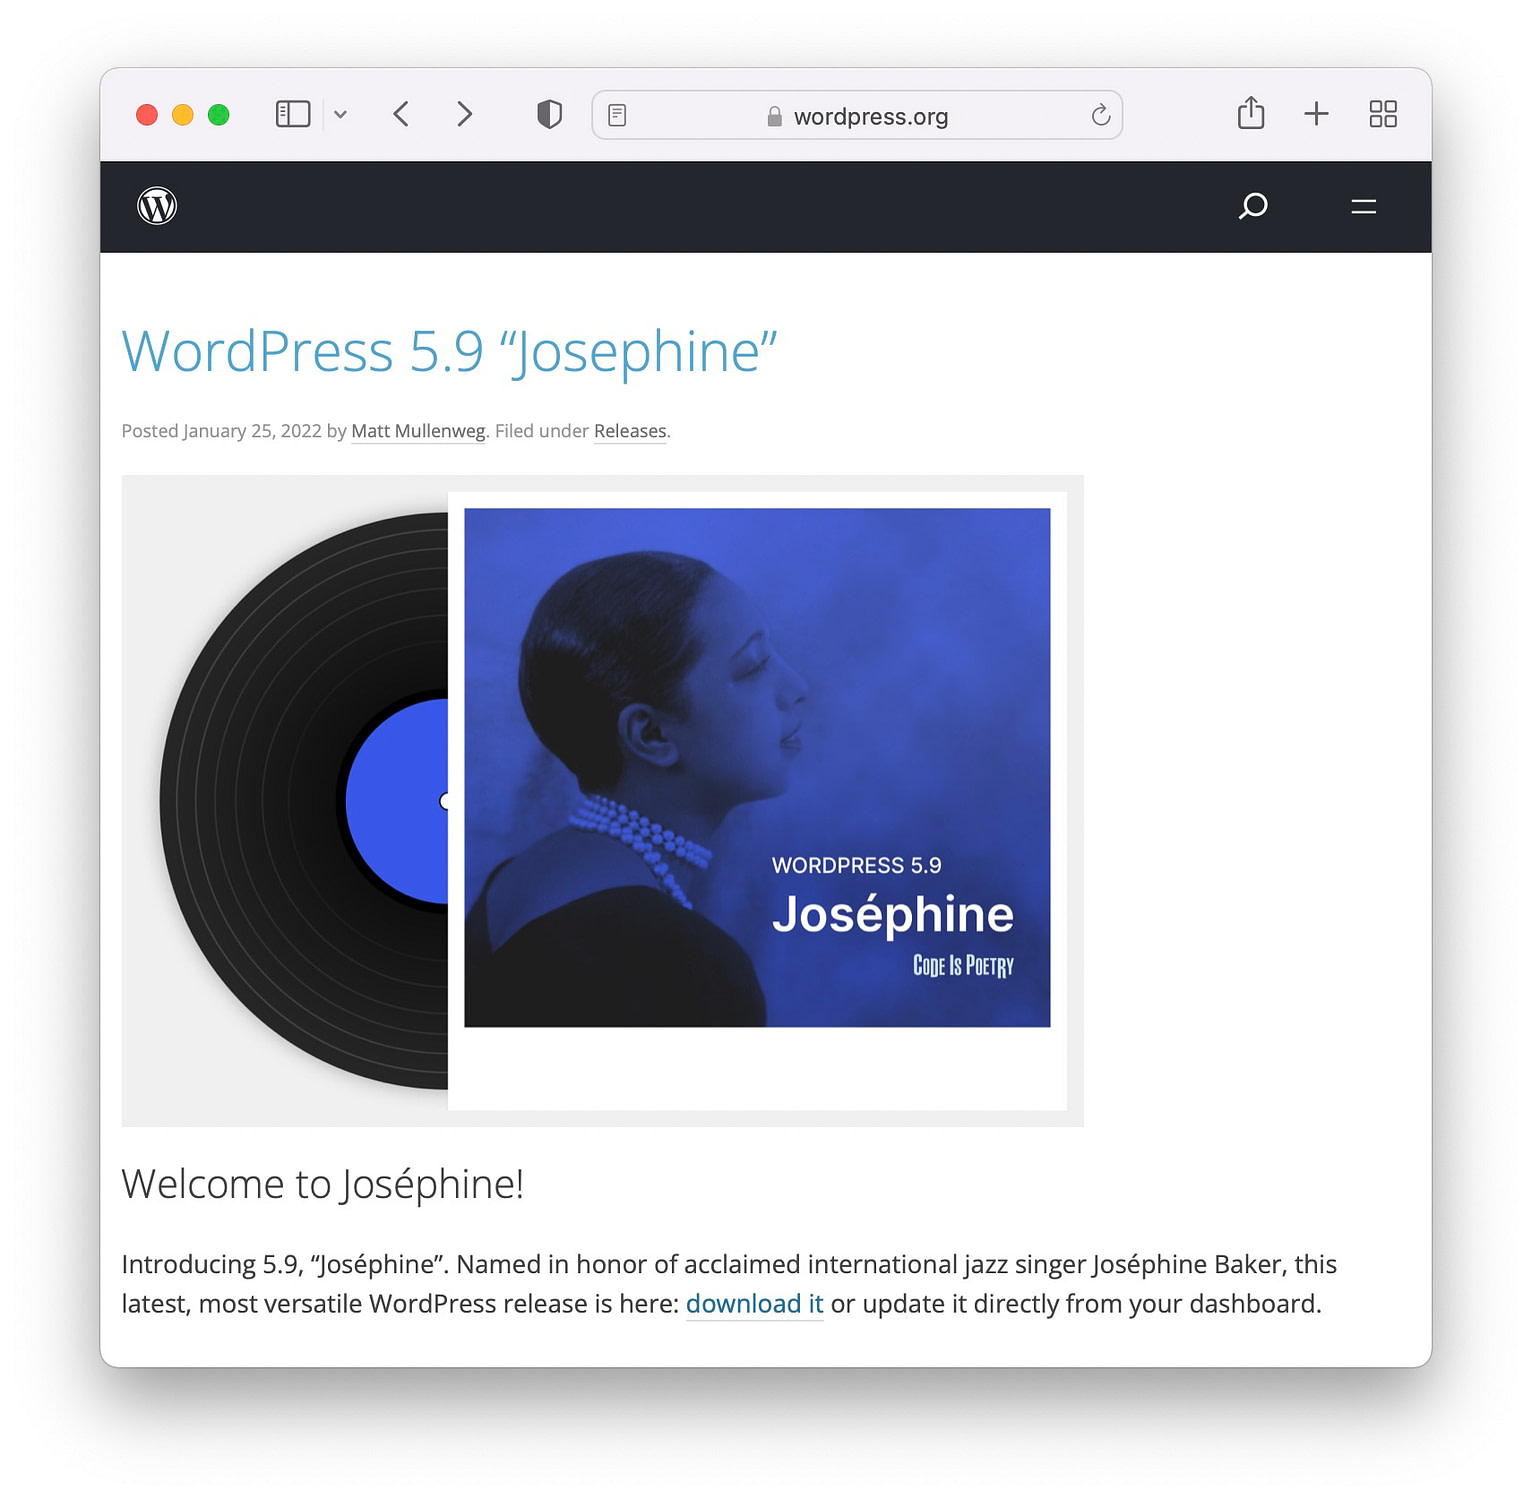 WordPress 5.9